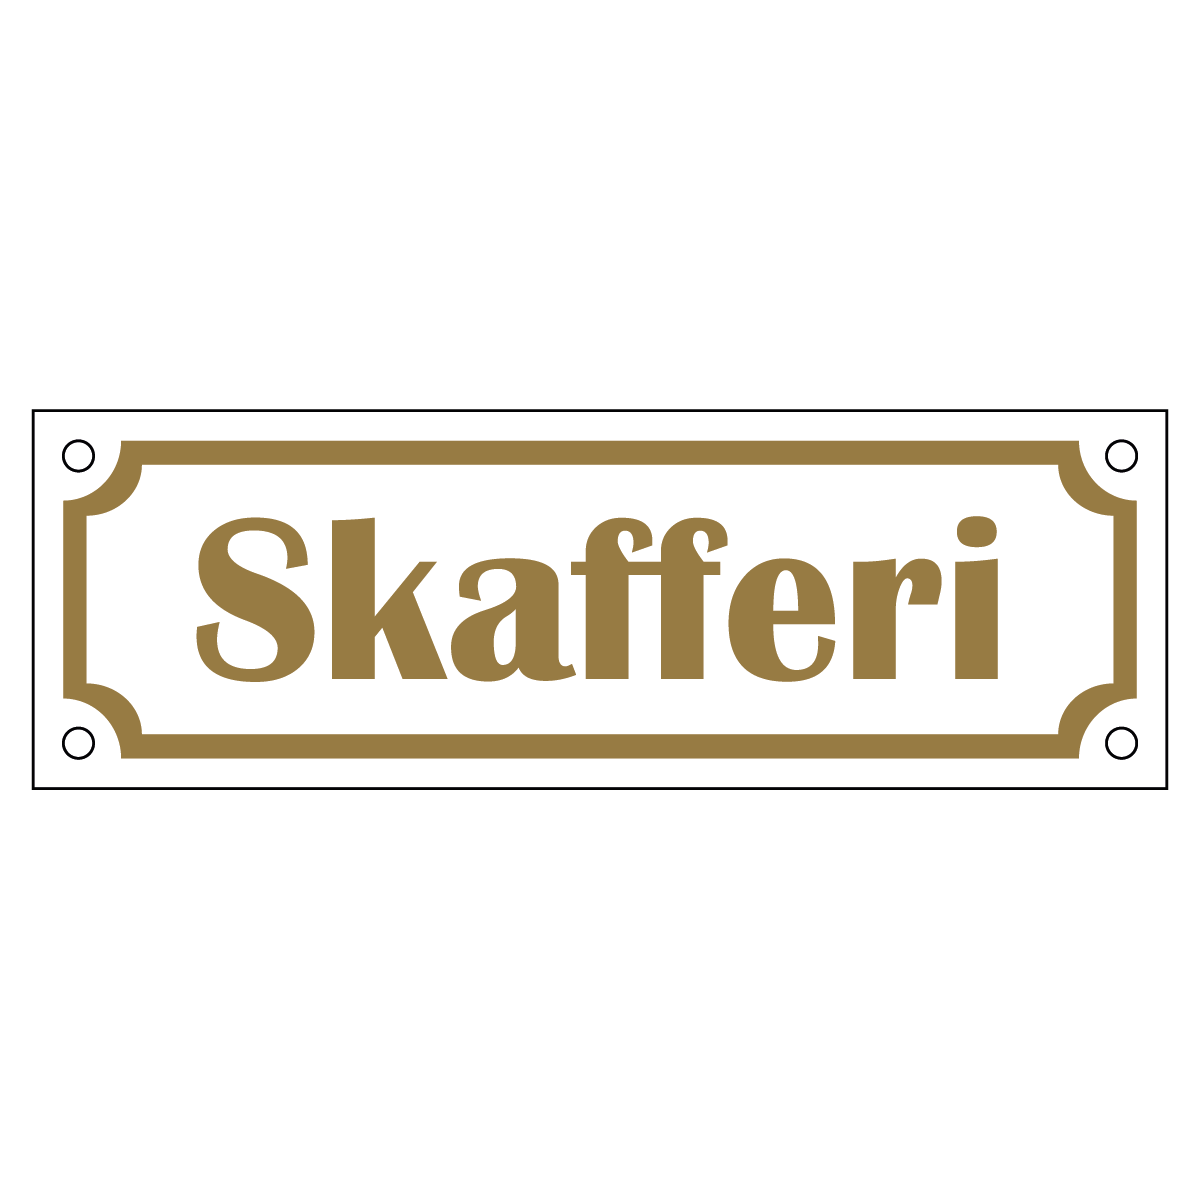 Skafferi - Skylt - 150x50mm - Vit - Guld